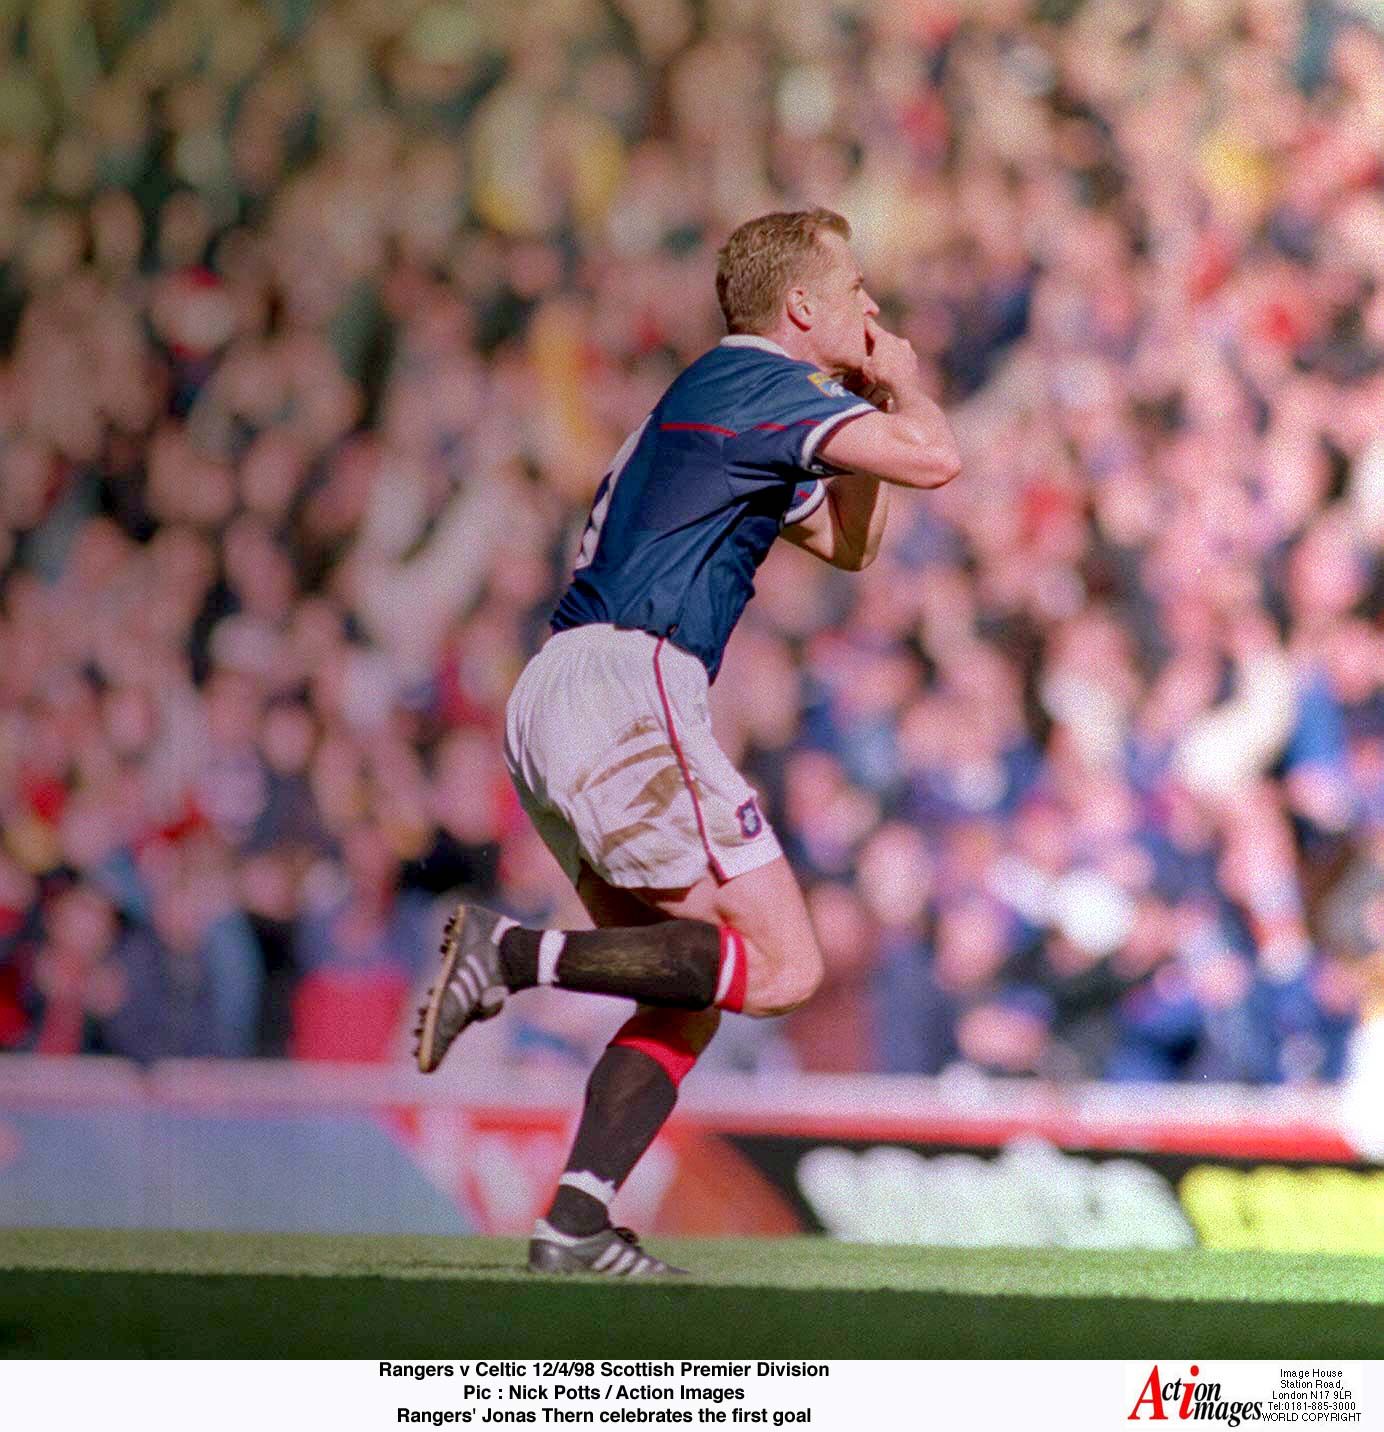 Rangers v Celtic 12/4/98 Scottish Premier Division 
Pic : Nick Potts / Action Images 
Rangers' Jonas Thern celebrates the first goal